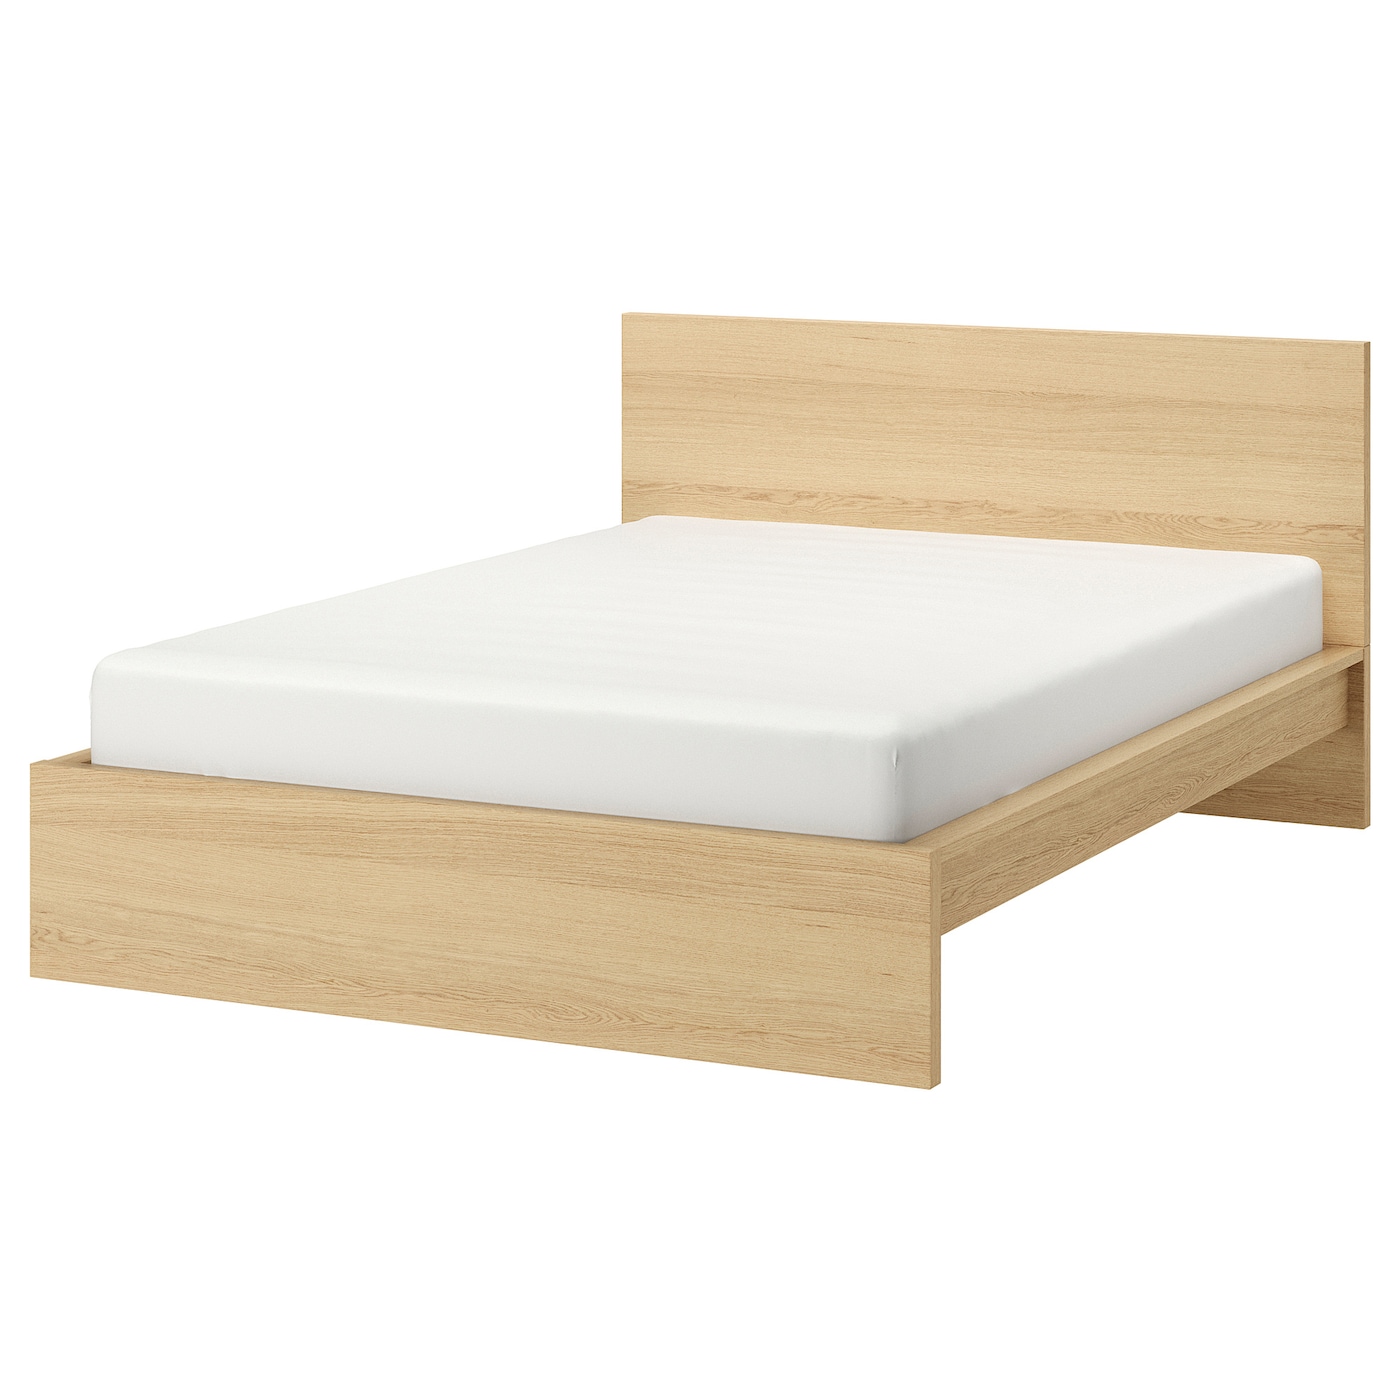 Каркас кровати - IKEA MALM, 200х160 см, под беленый дуб, МАЛЬМ ИКЕА